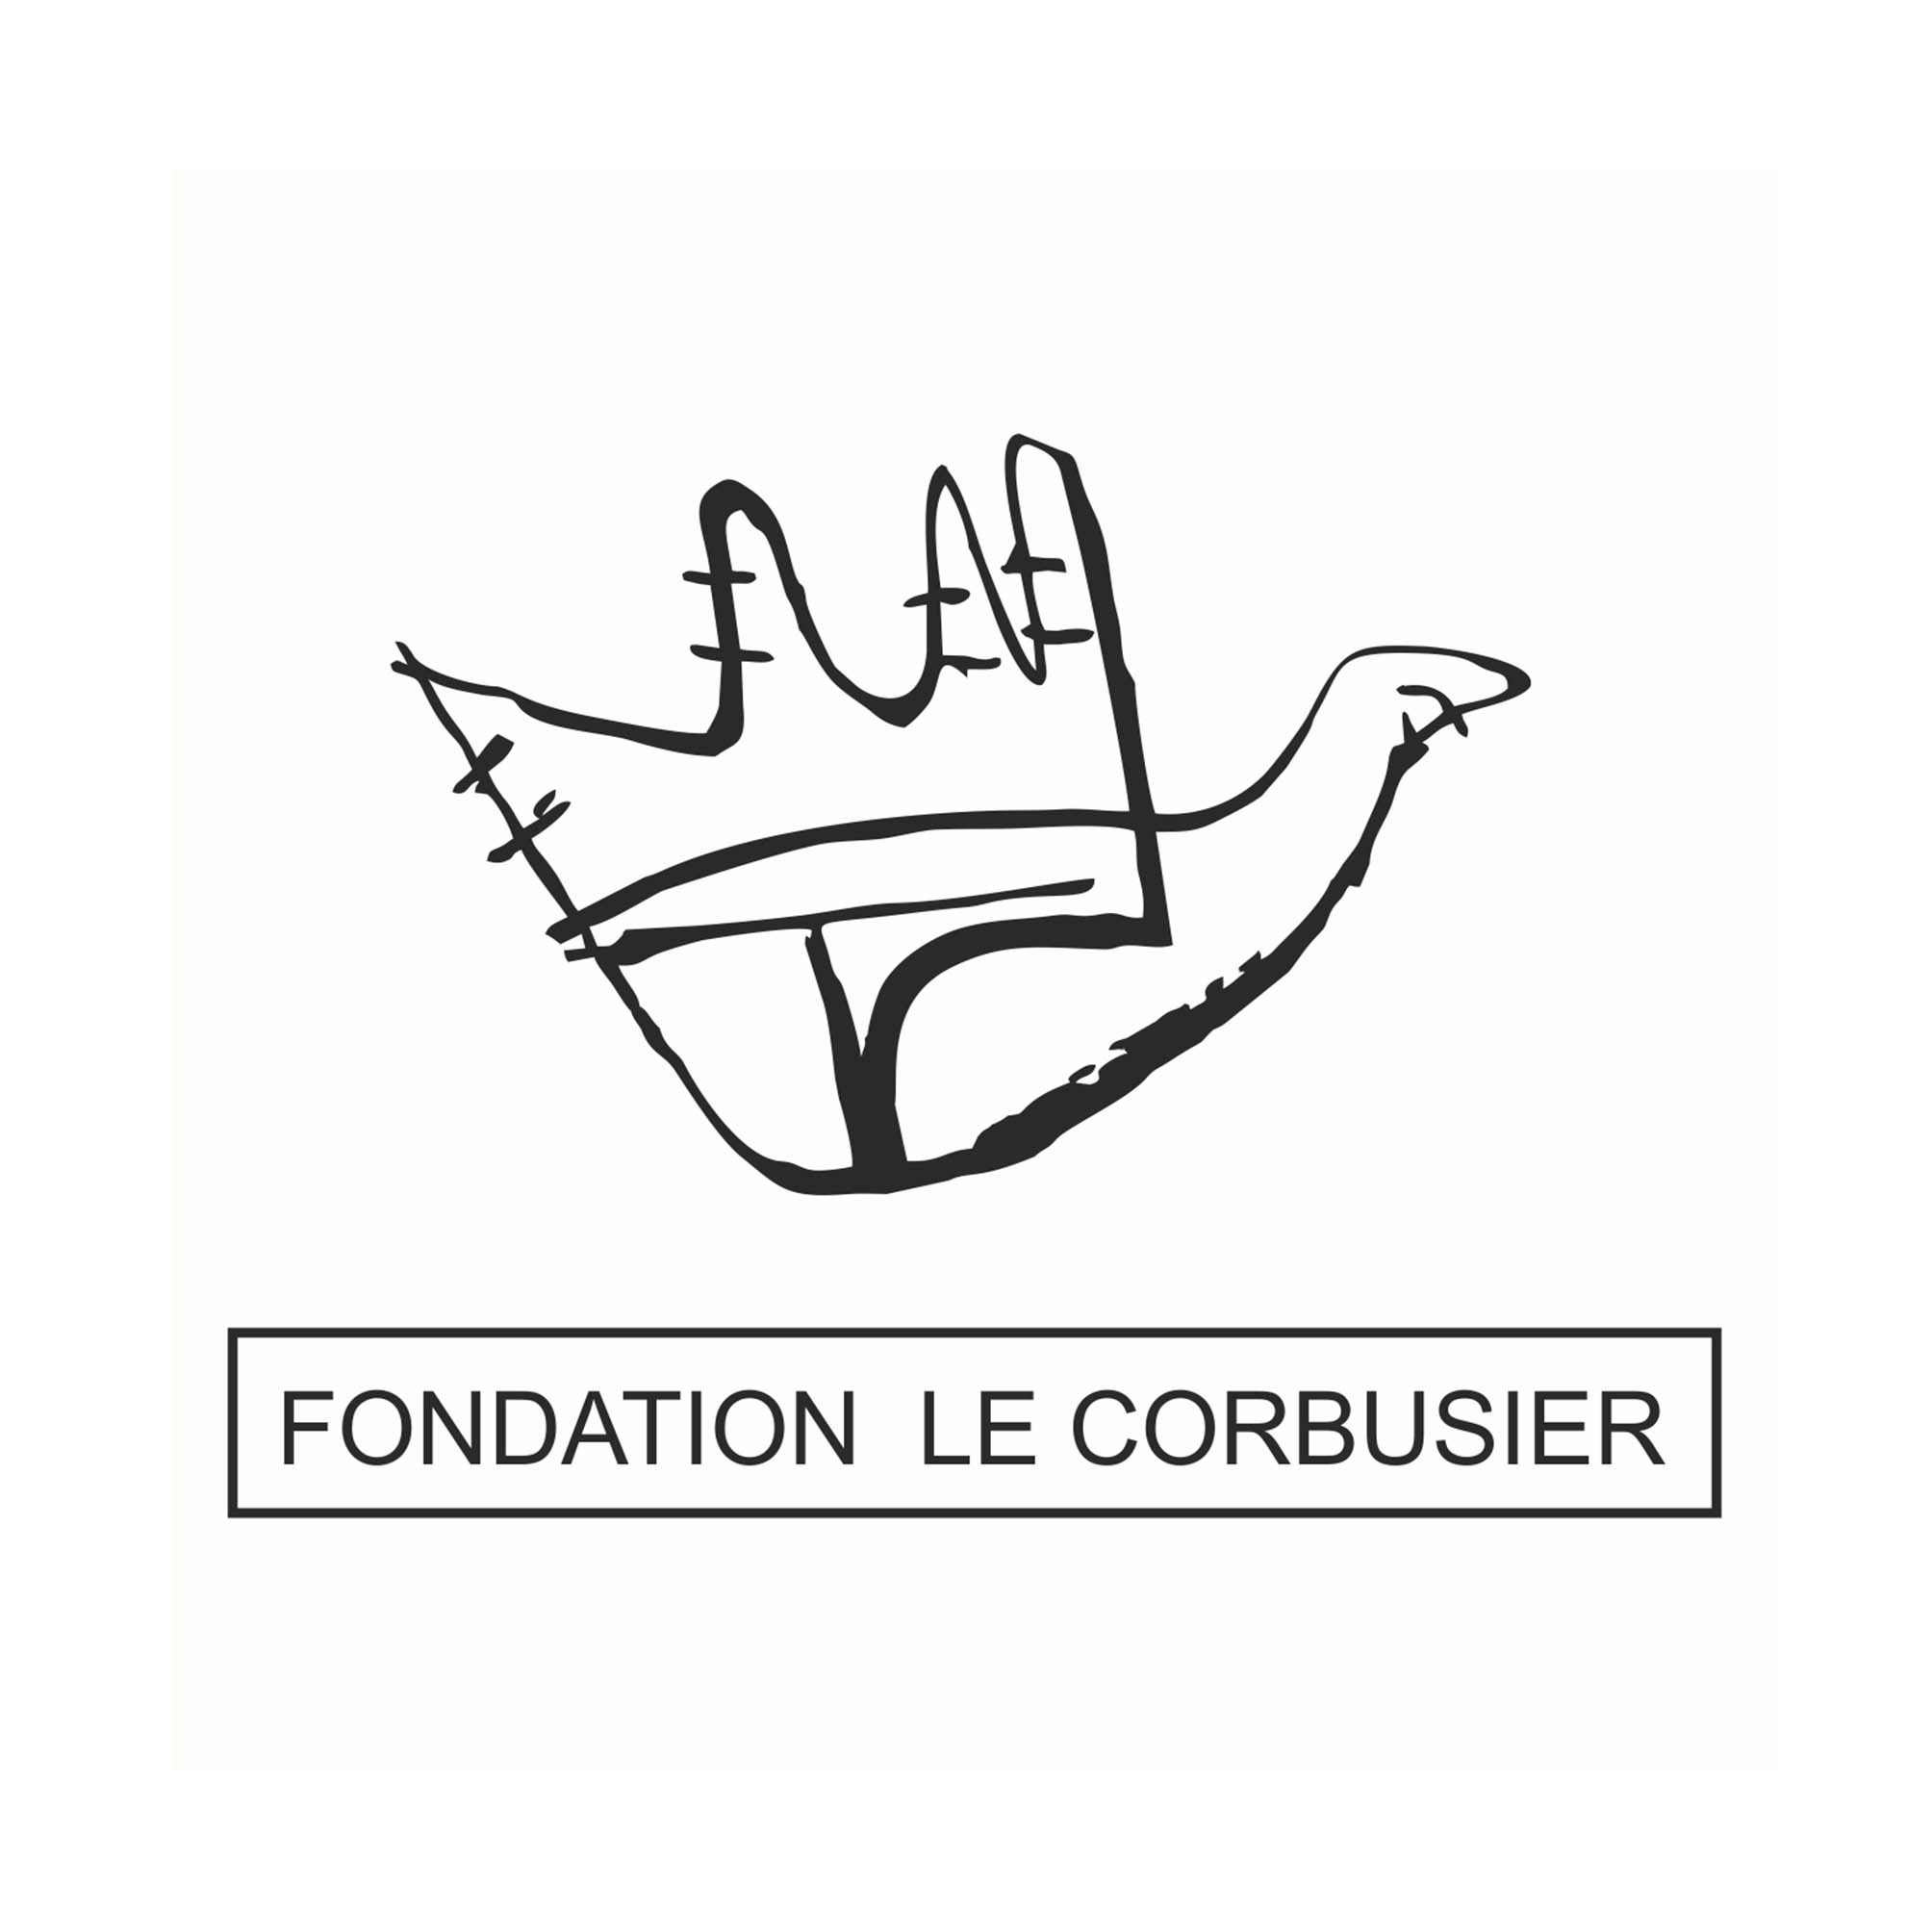 Fond Le Corbusier